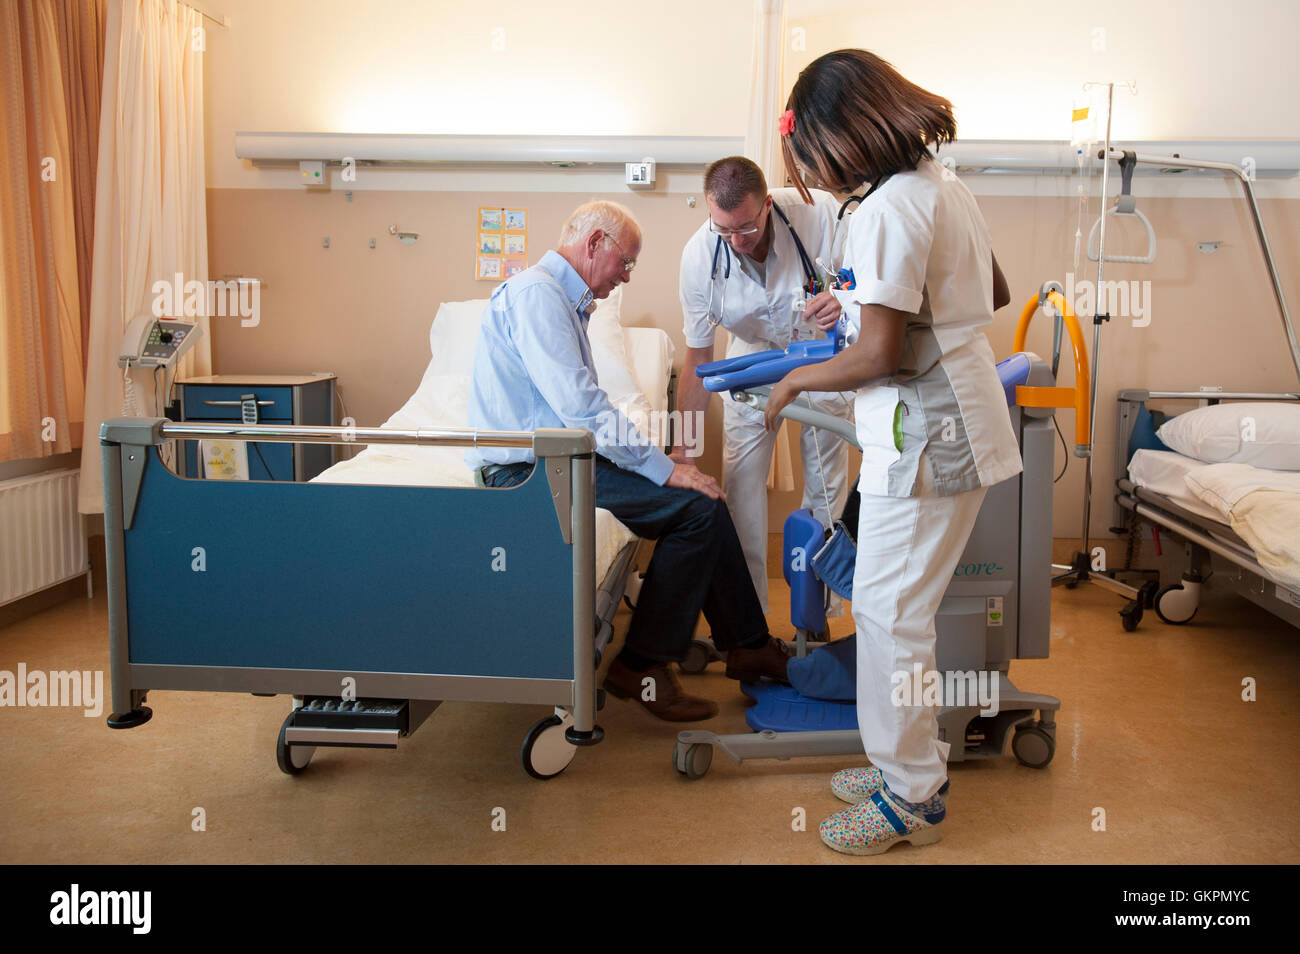 Helpen Verpleegkundigen een paziente uit bed met een til ascensore. Gli infermieri aiutare un paziente al di fuori del letto con un sollevatore attivo. Foto Stock